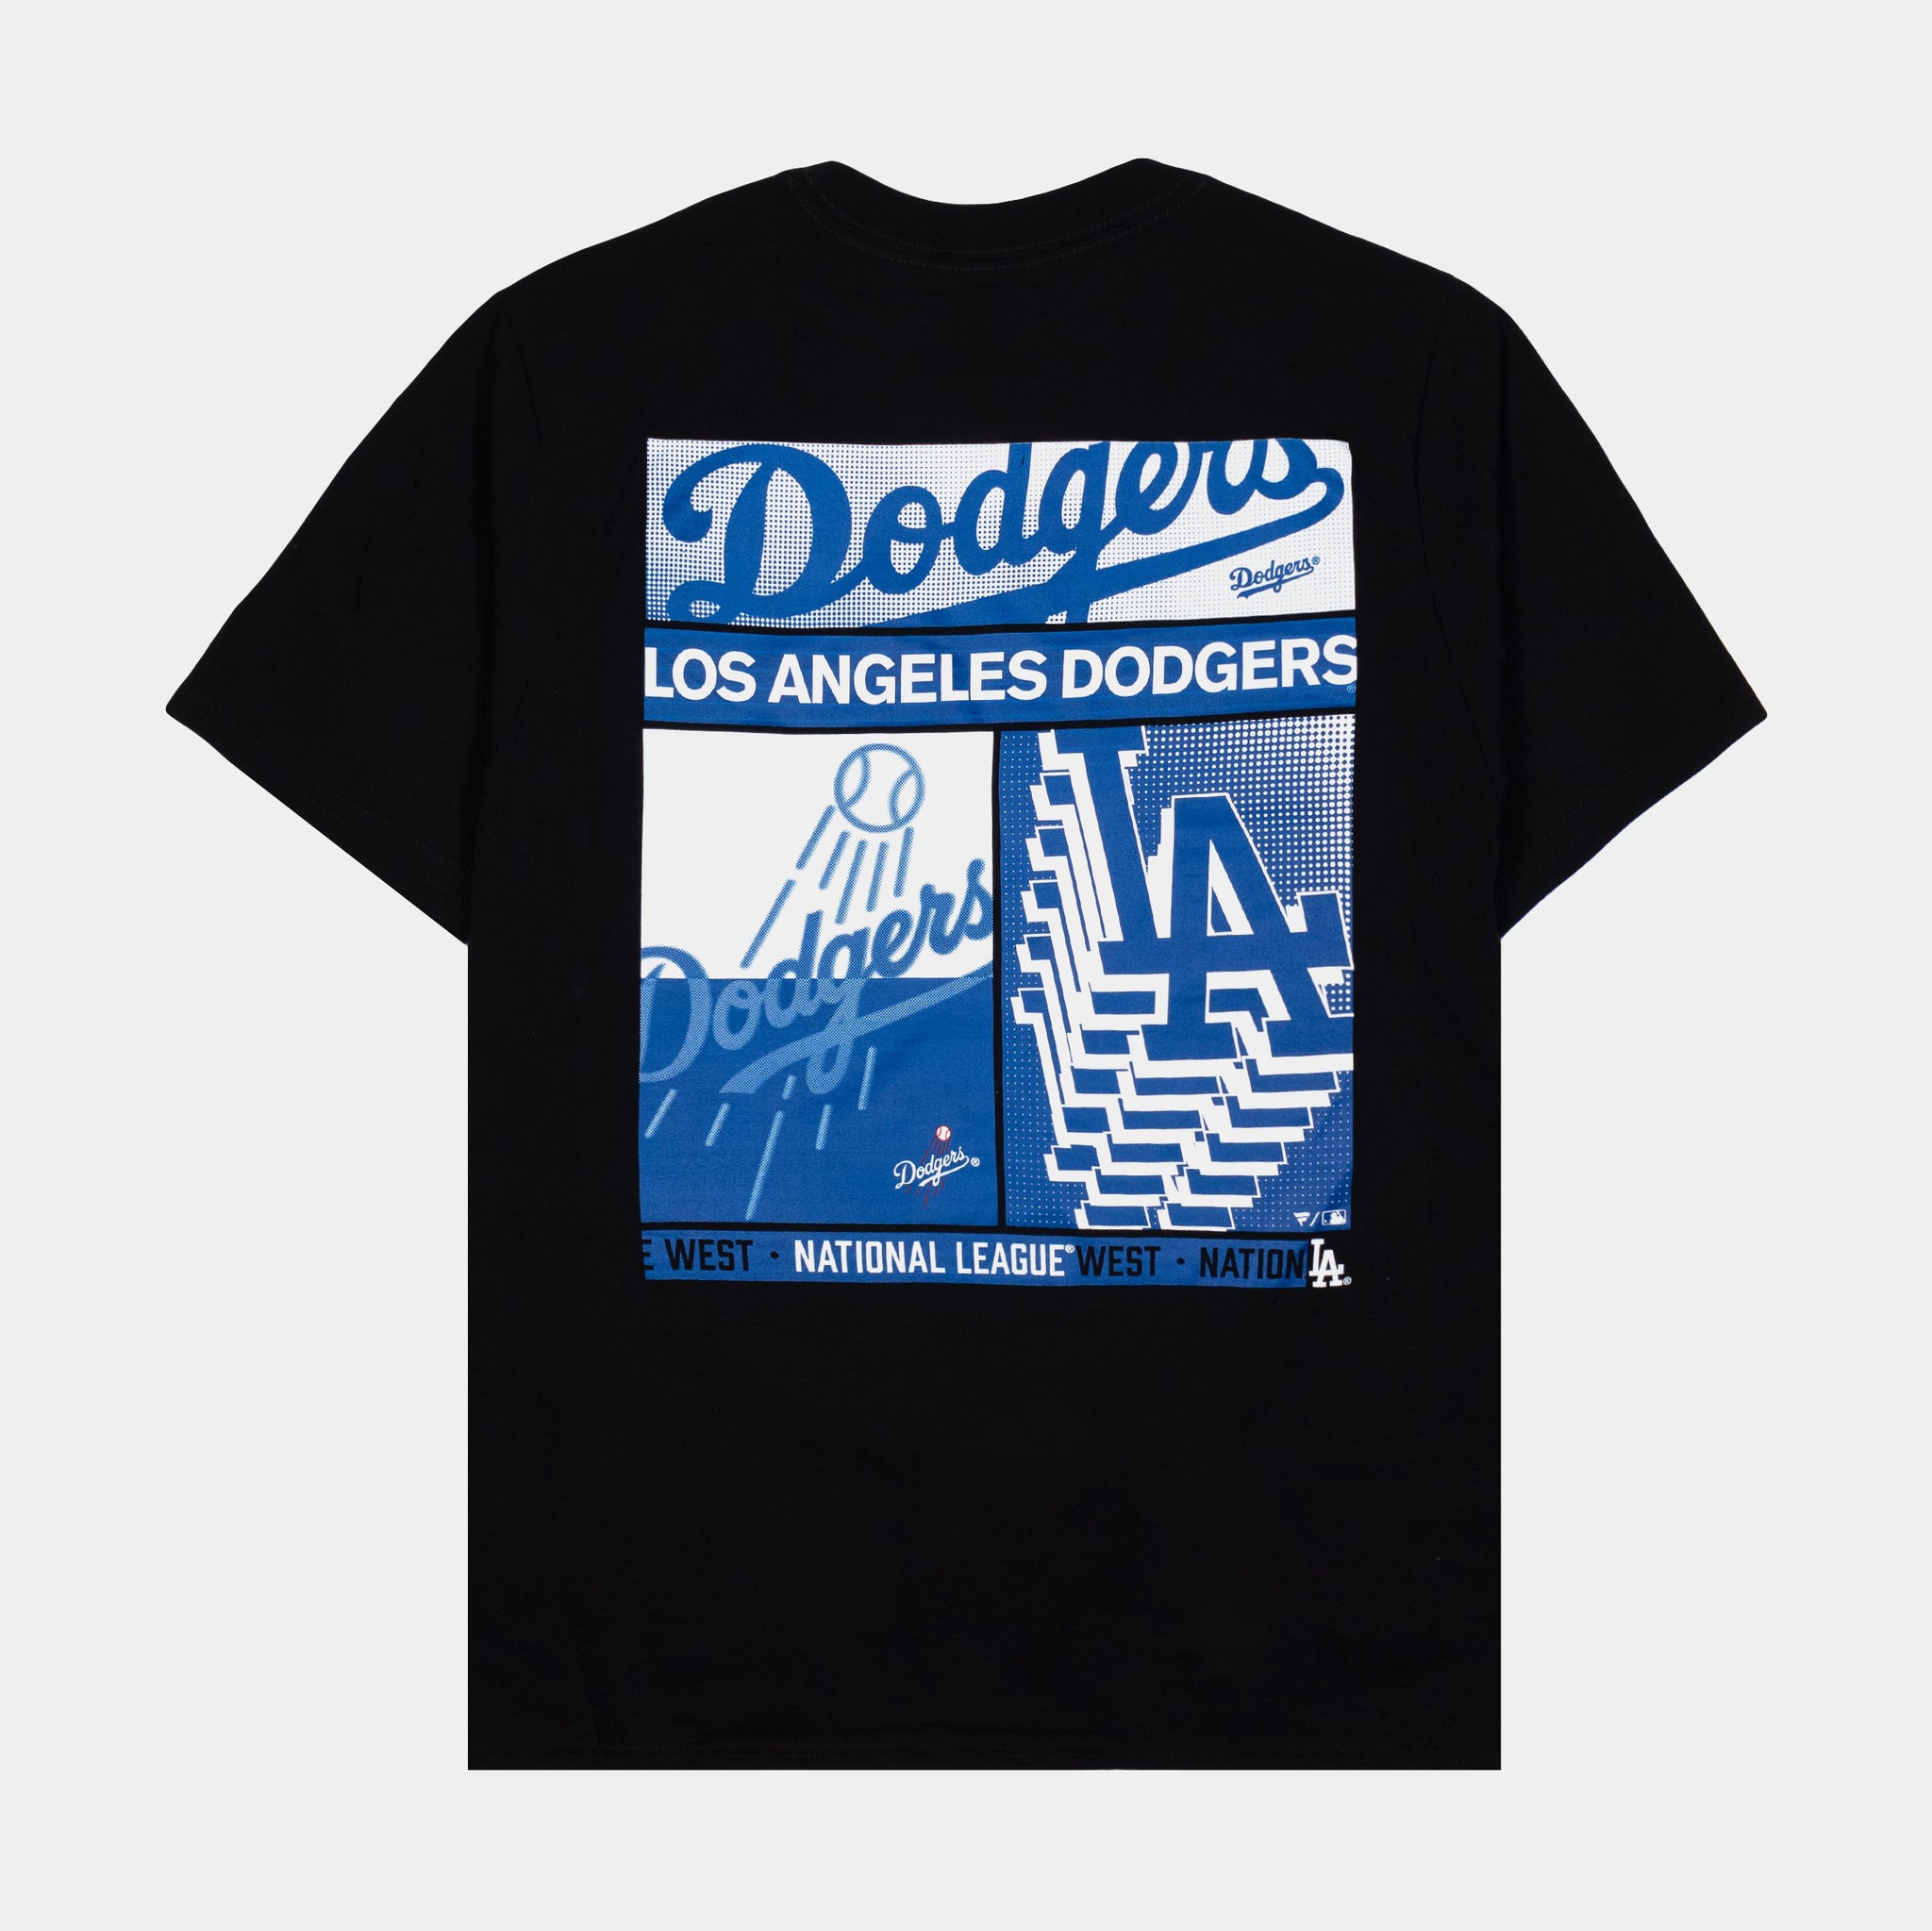 Salad Dodgers tshirt